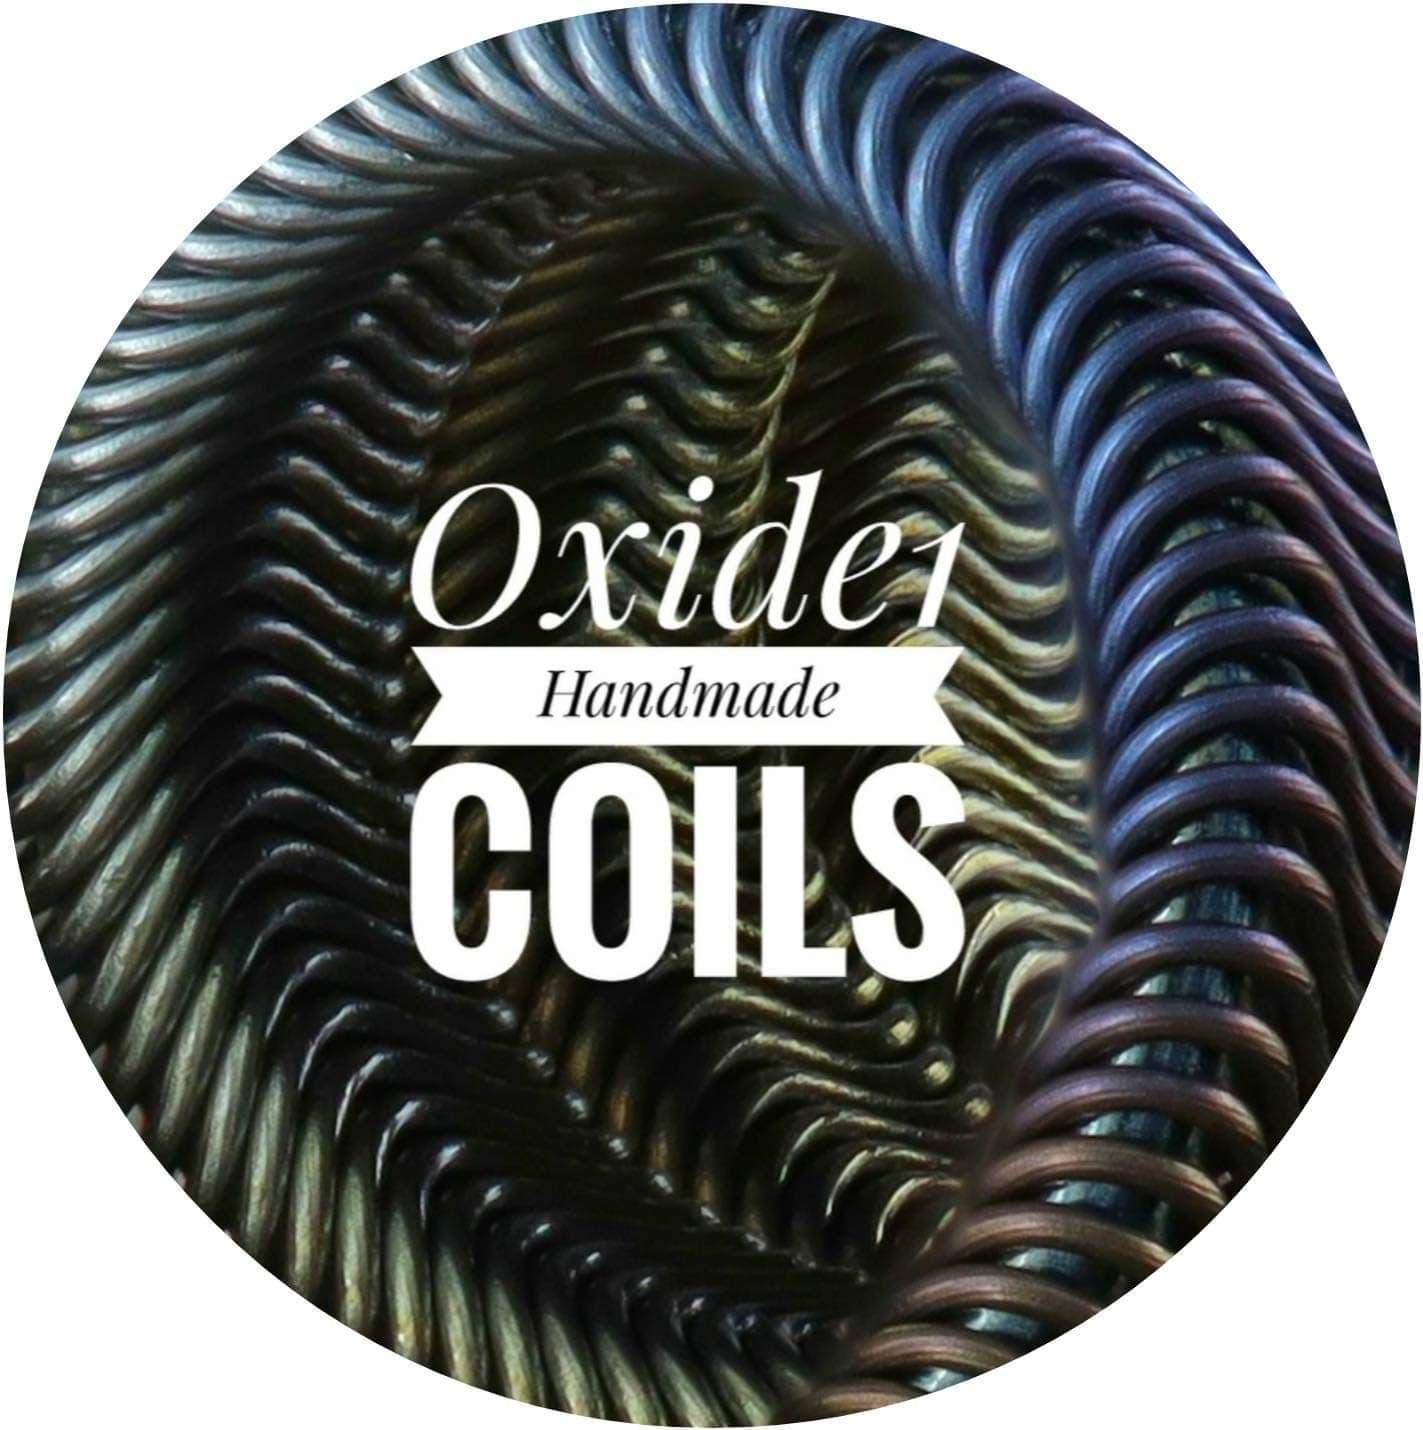 Oxide1 - Alien Coils, [product_vandor]